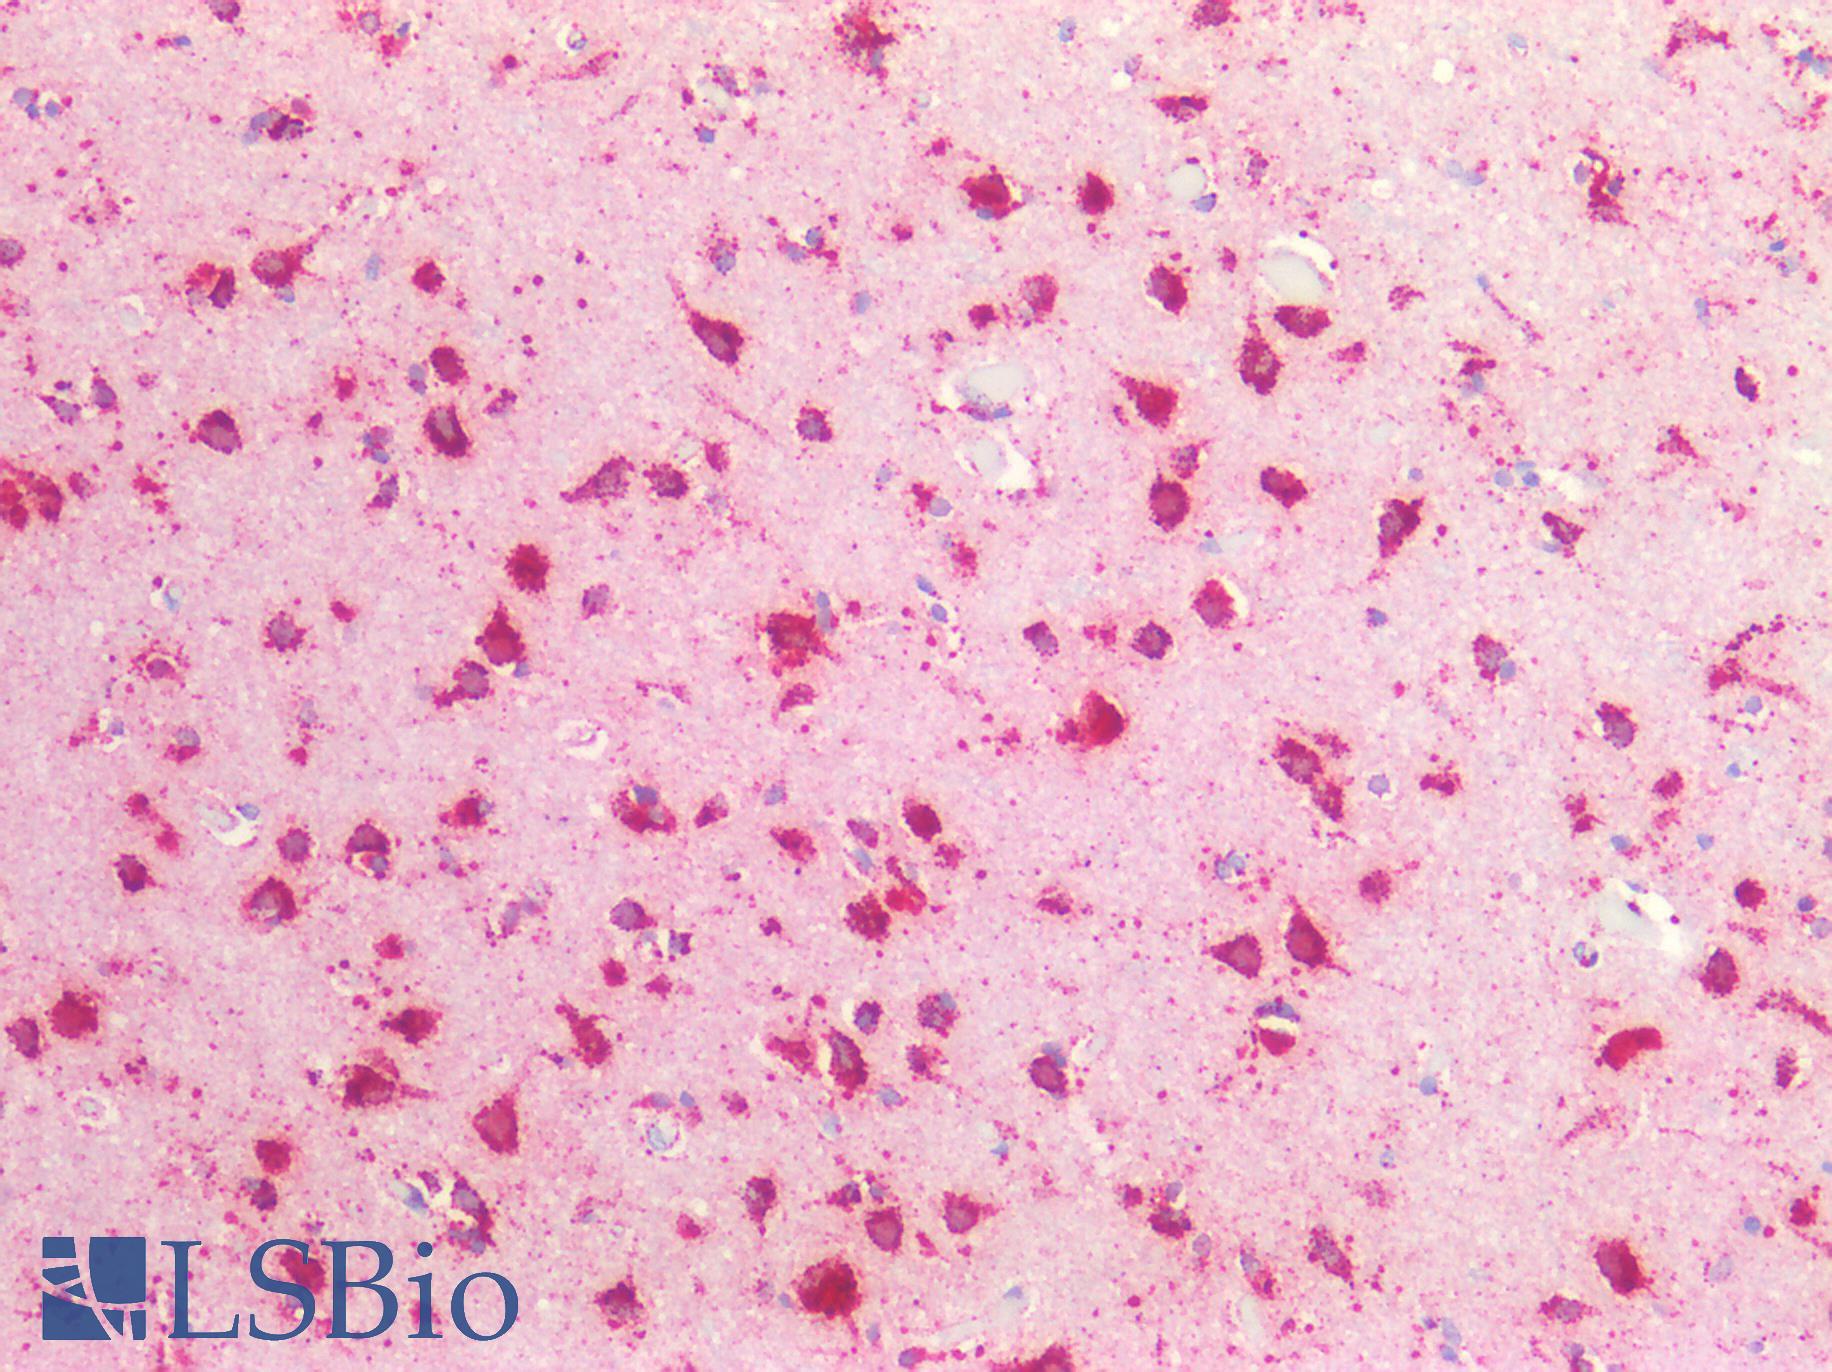 CTSD / Cathepsin D Antibody - Human Brain, Cortex: Formalin-Fixed, Paraffin-Embedded (FFPE)